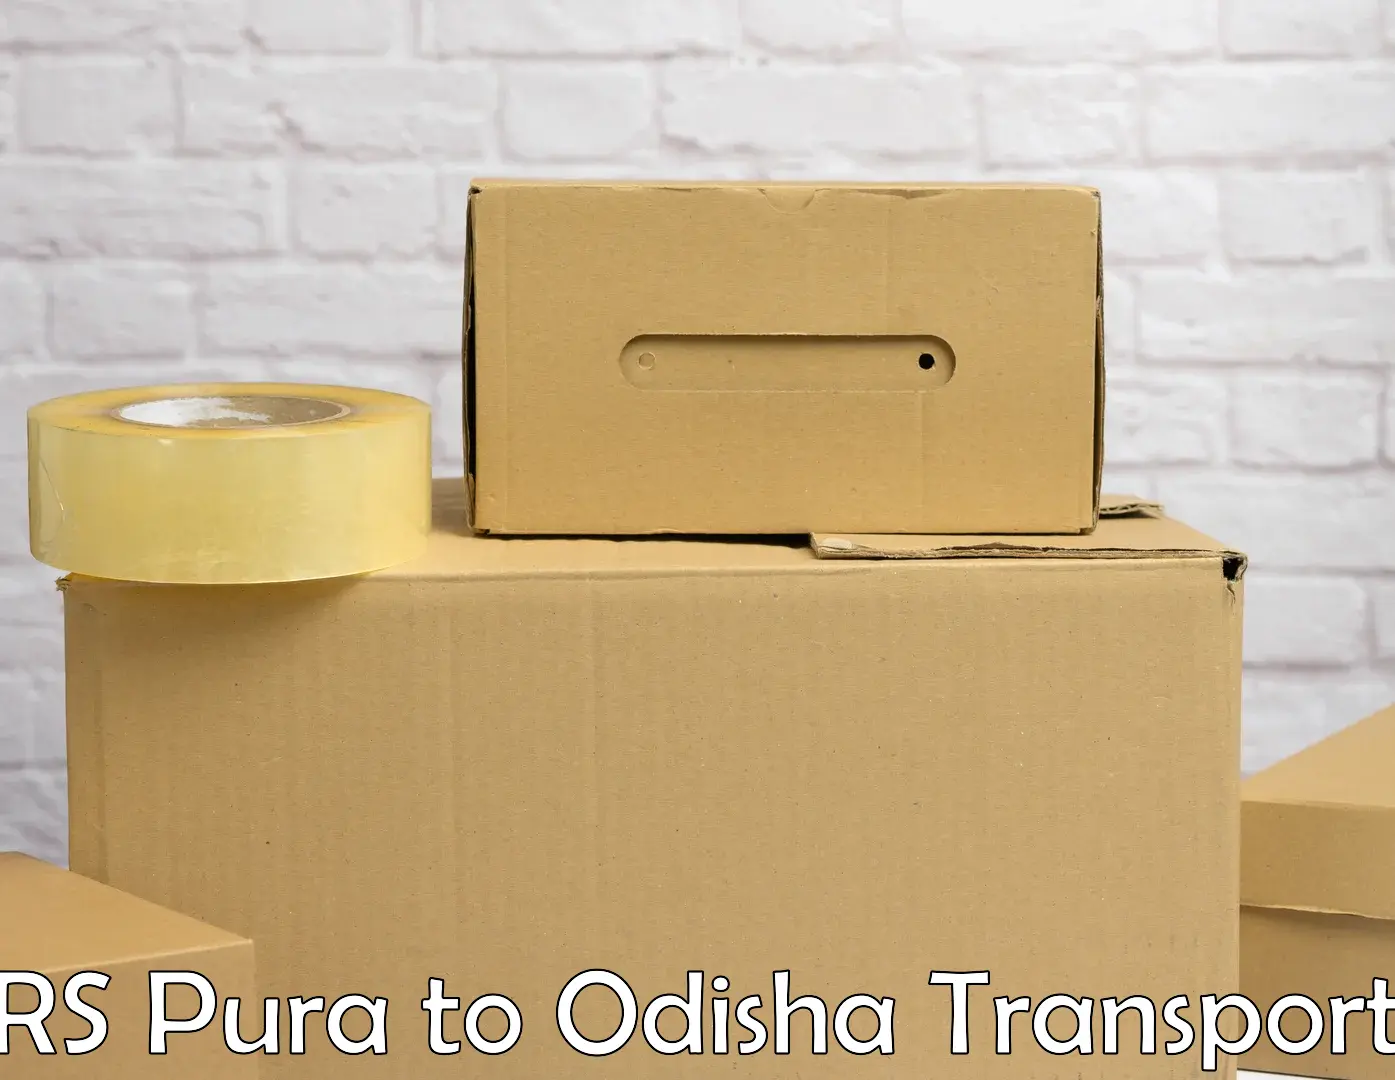 Online transport service RS Pura to Odisha